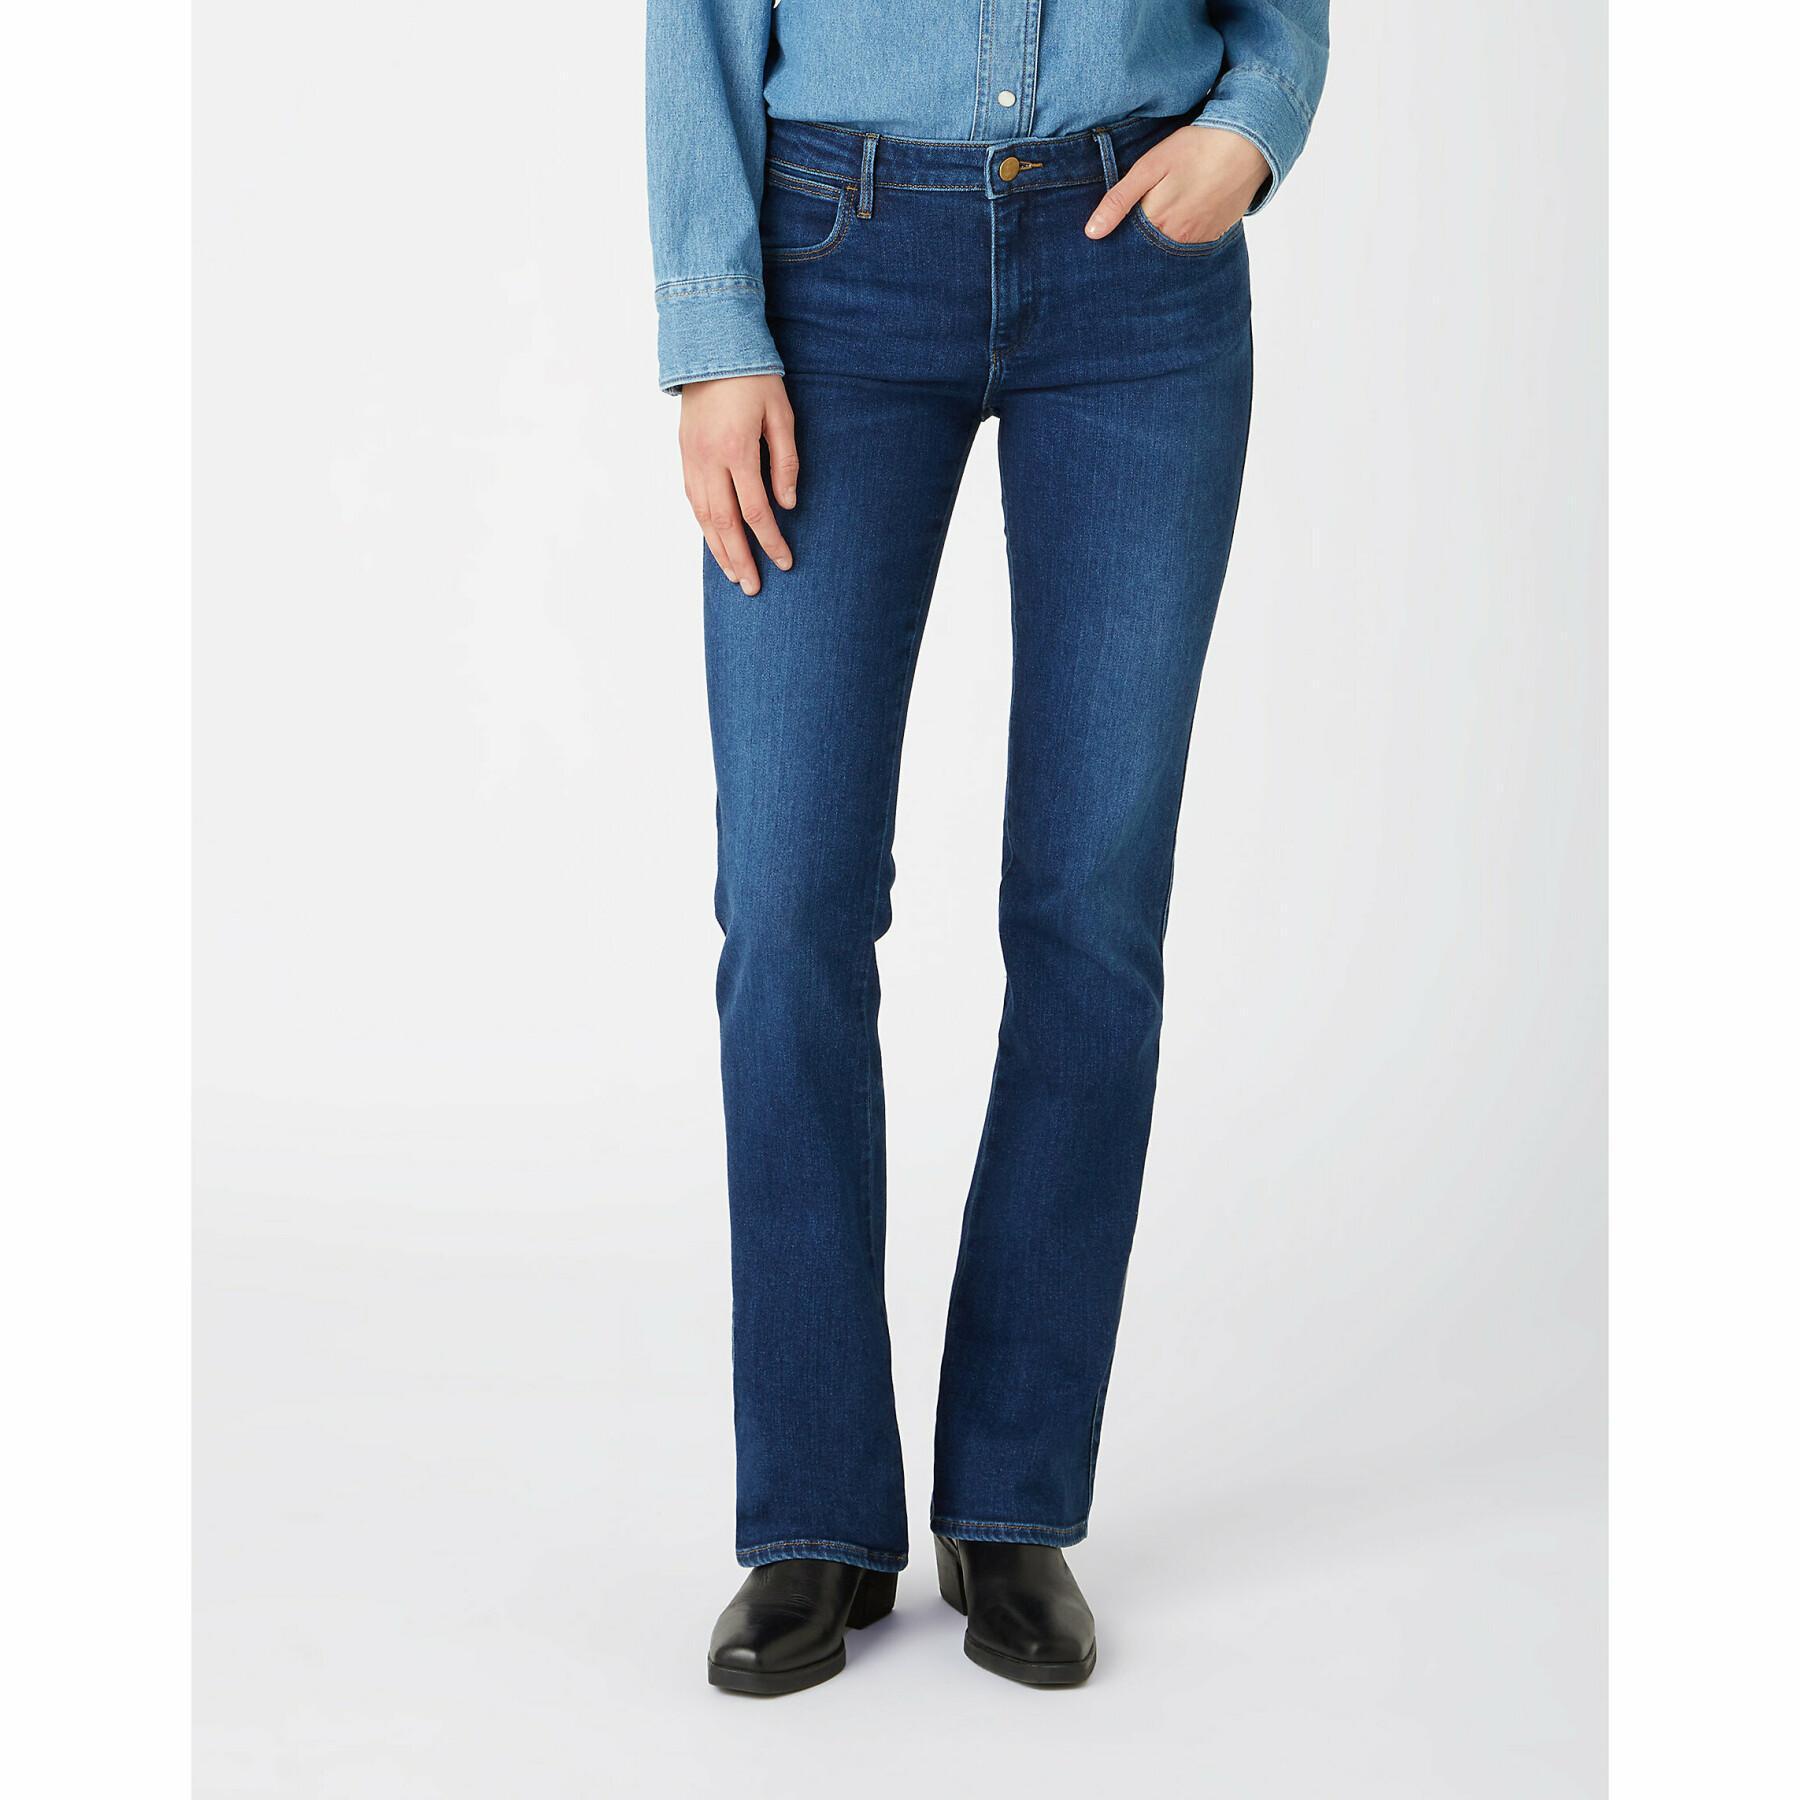 Women's bootcut jeans Wrangler Love